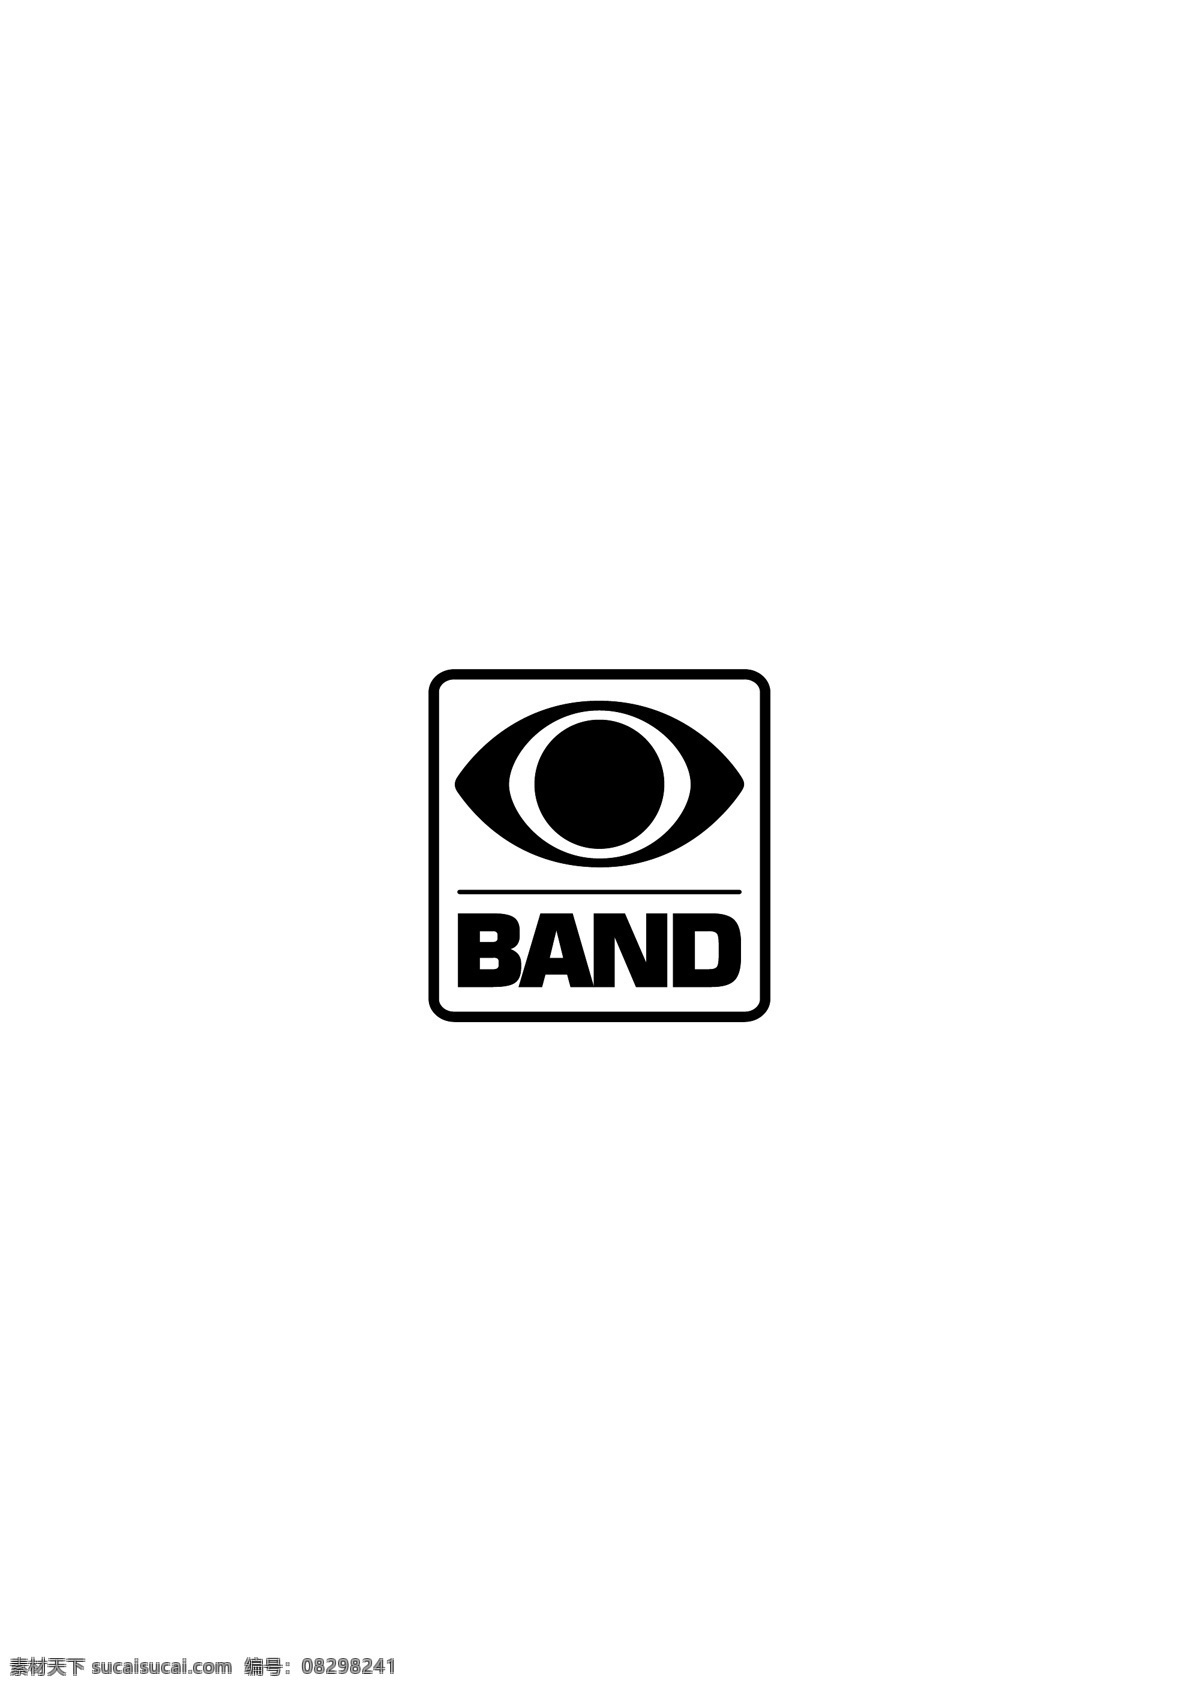 band logo大全 logo 设计欣赏 商业矢量 矢量下载 乐队 标志 标志设计 欣赏 网页矢量 矢量图 其他矢量图